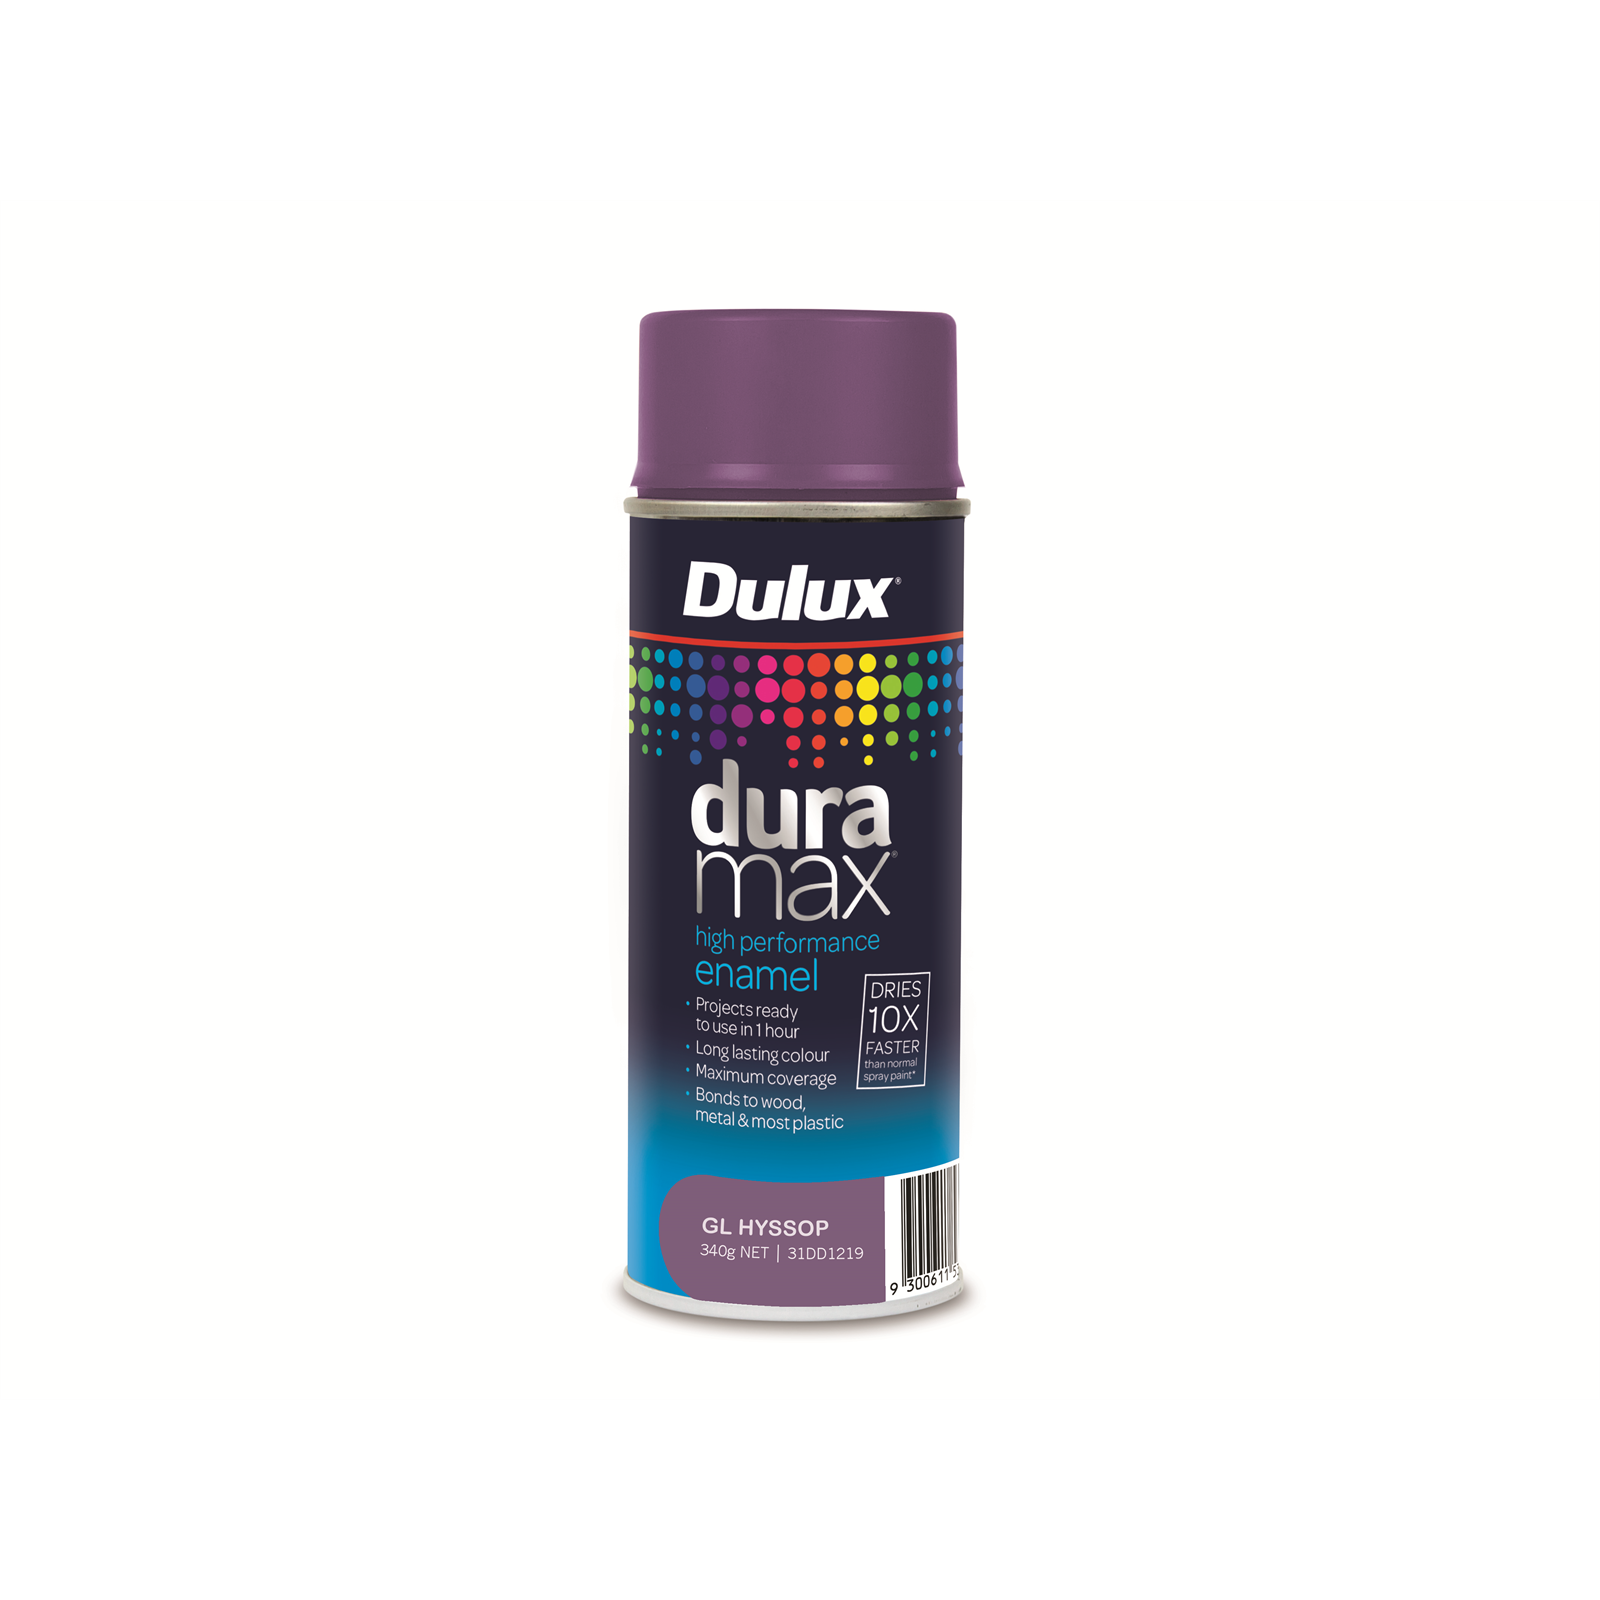 Dulux Duramax 340g Gloss Hyssop Spray Paint